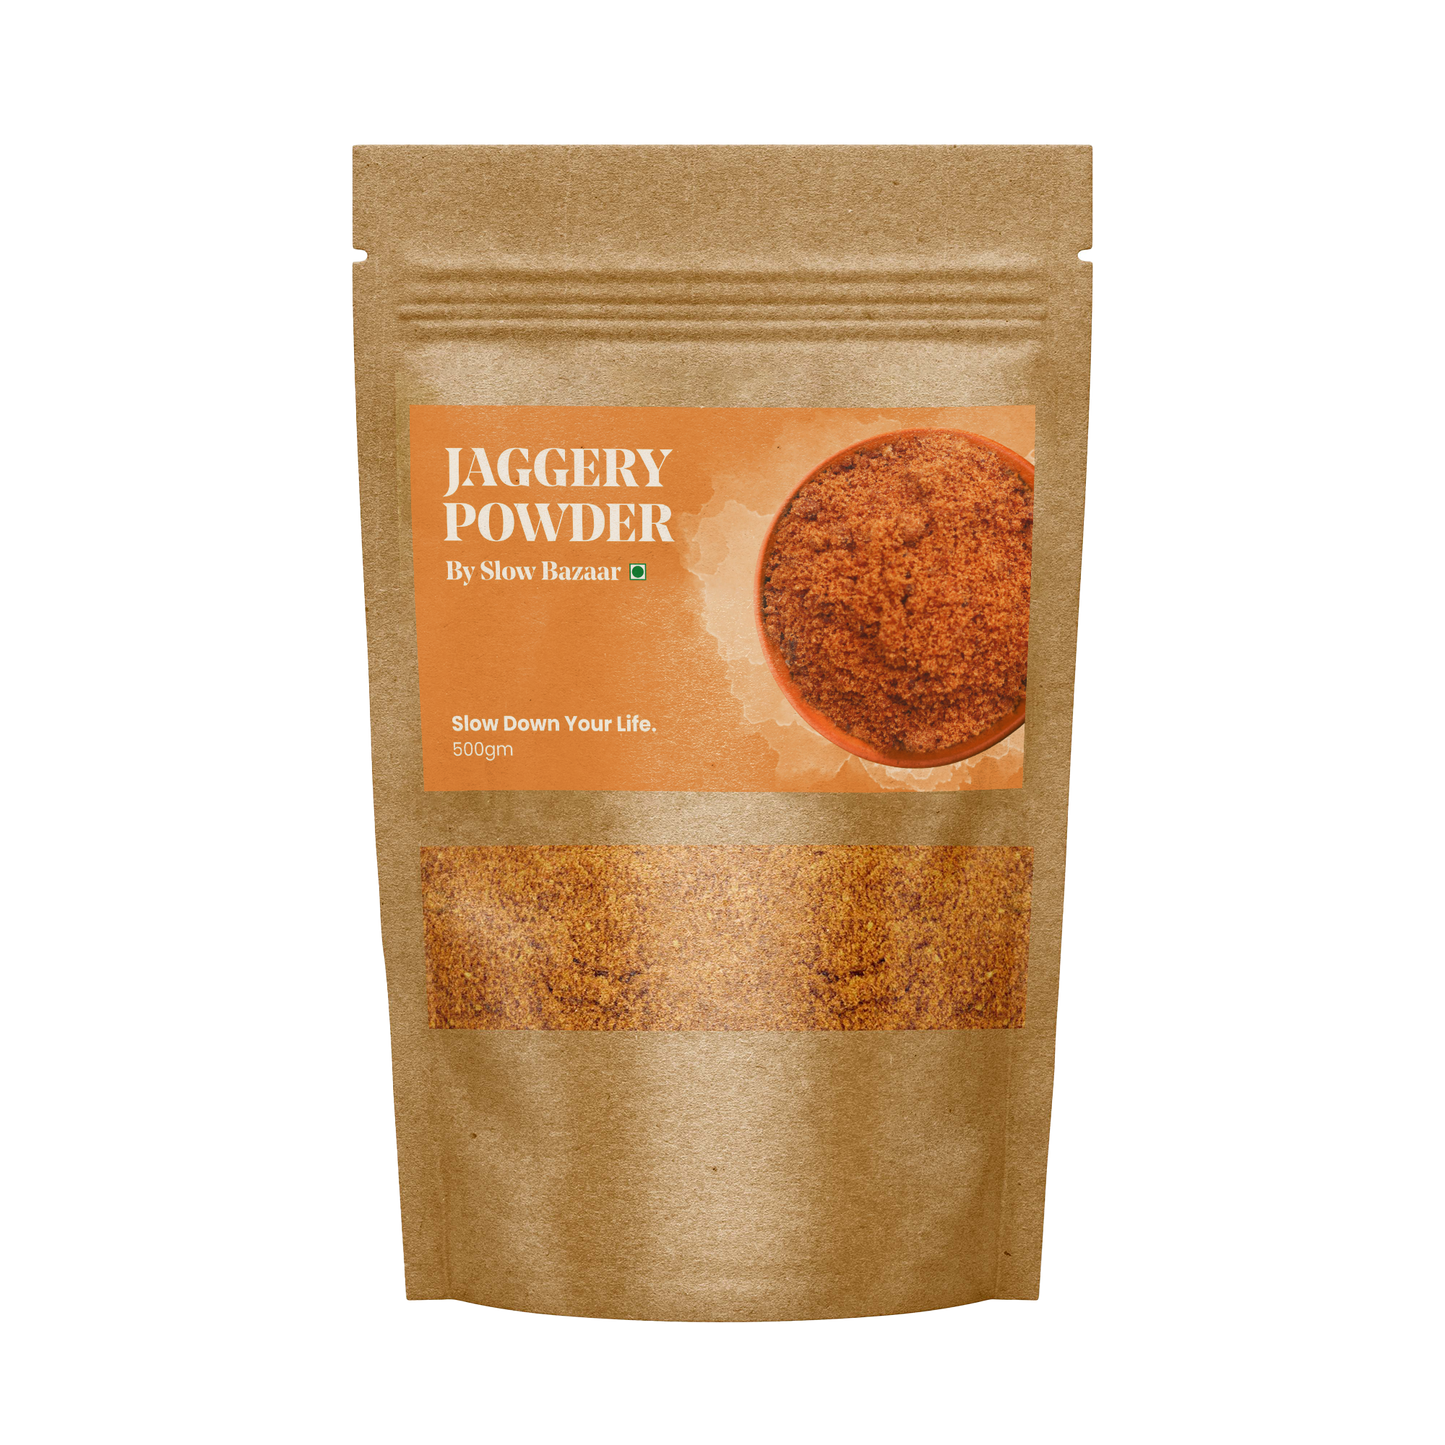 Jaggery Powder 500 gm